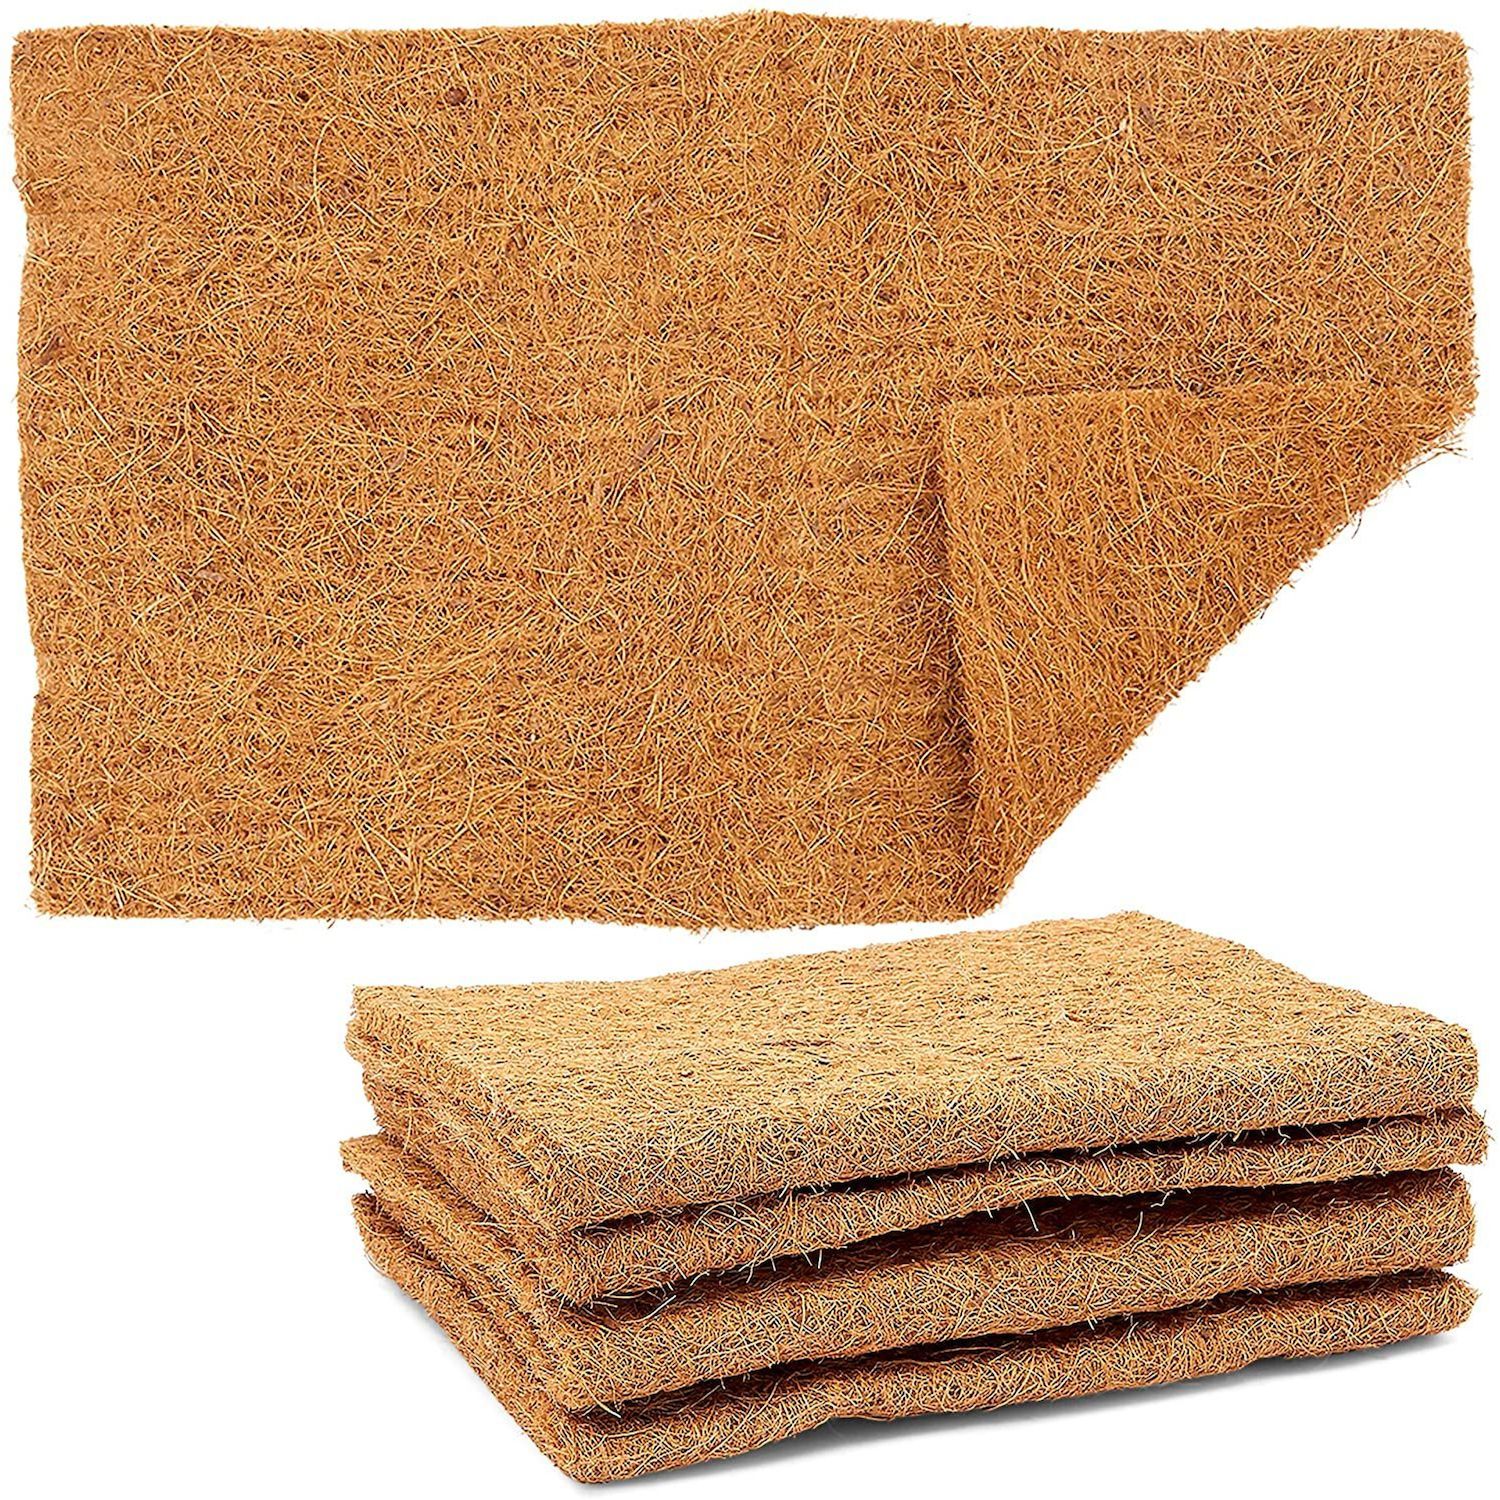 Plain Coco Coir Door Mat, Bare Natural Unadorned Doormat for